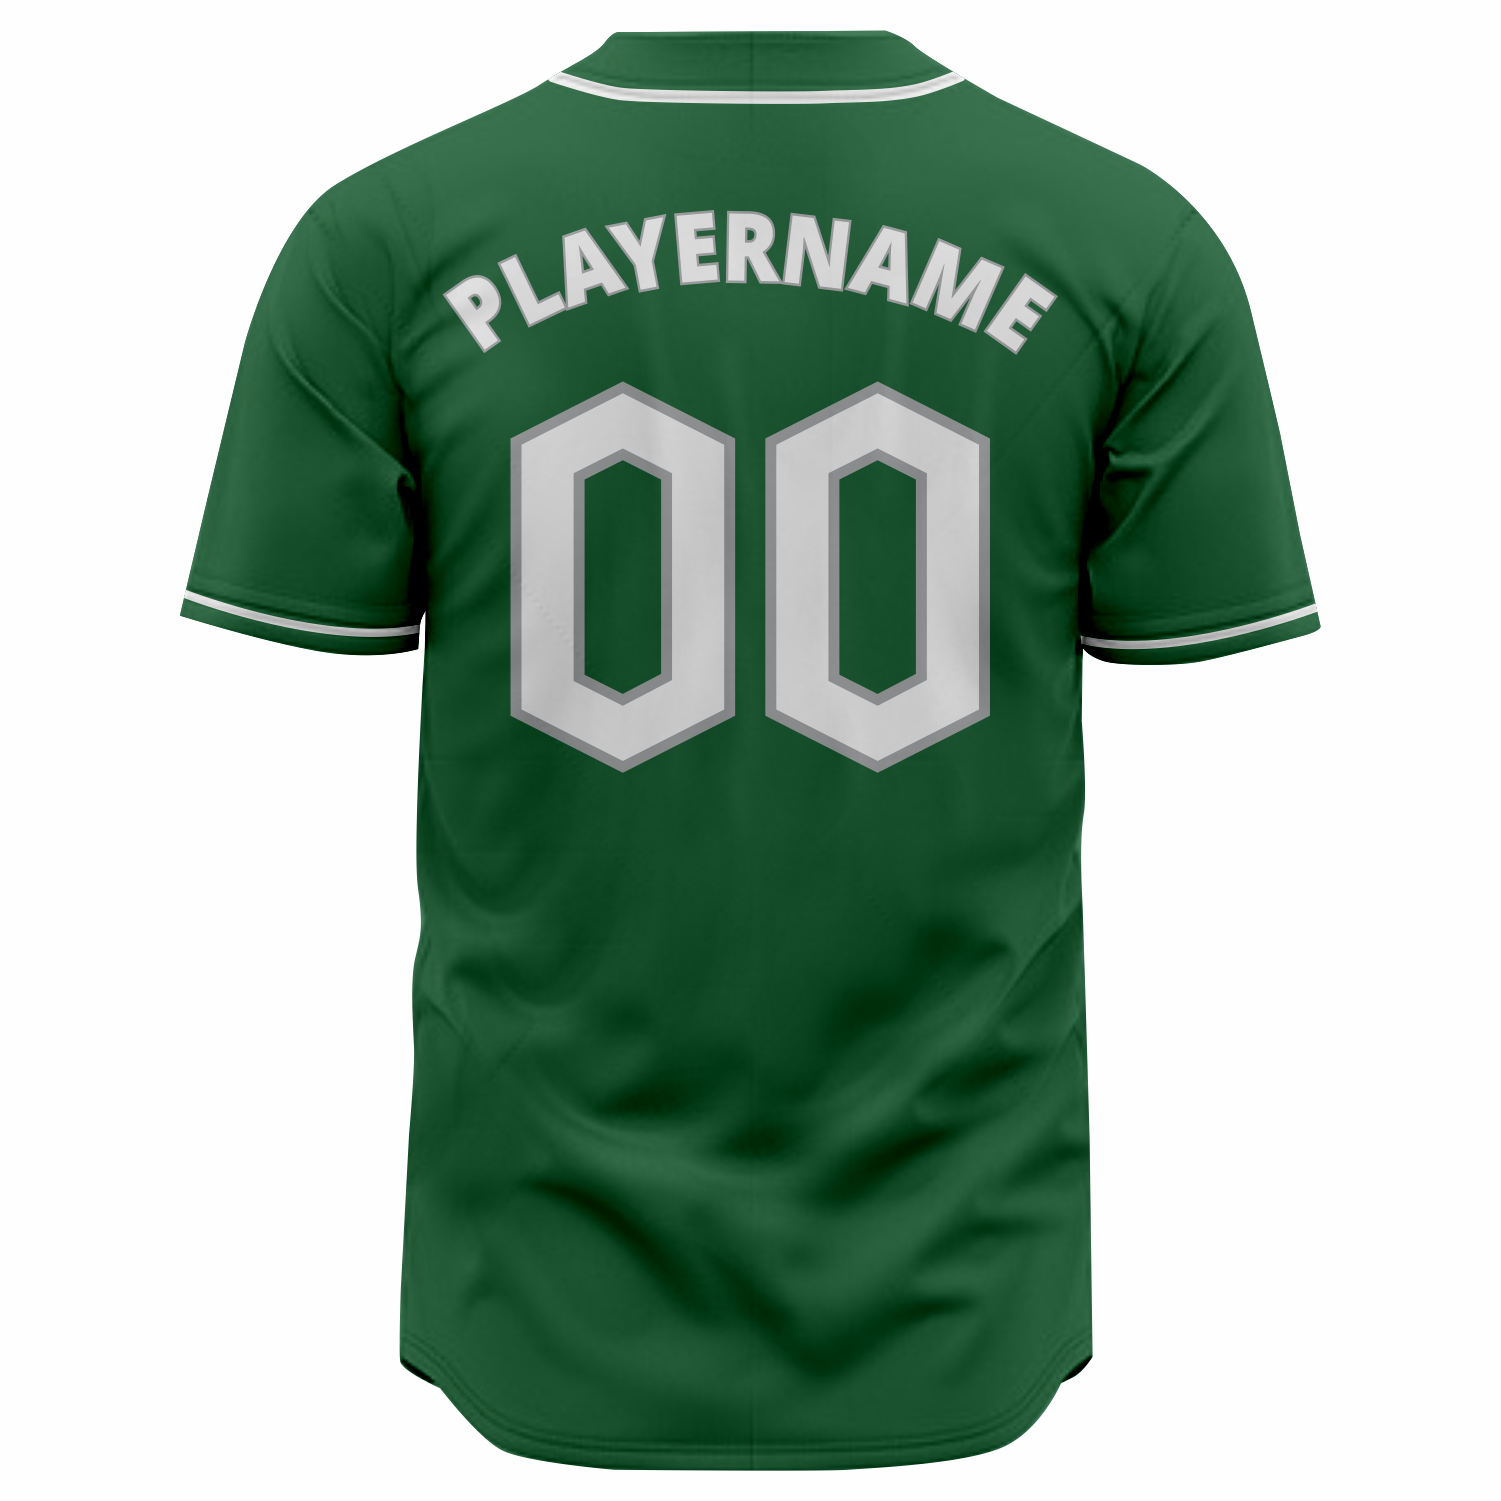 Verdi Green SS Baseball Jersey with Customization Available